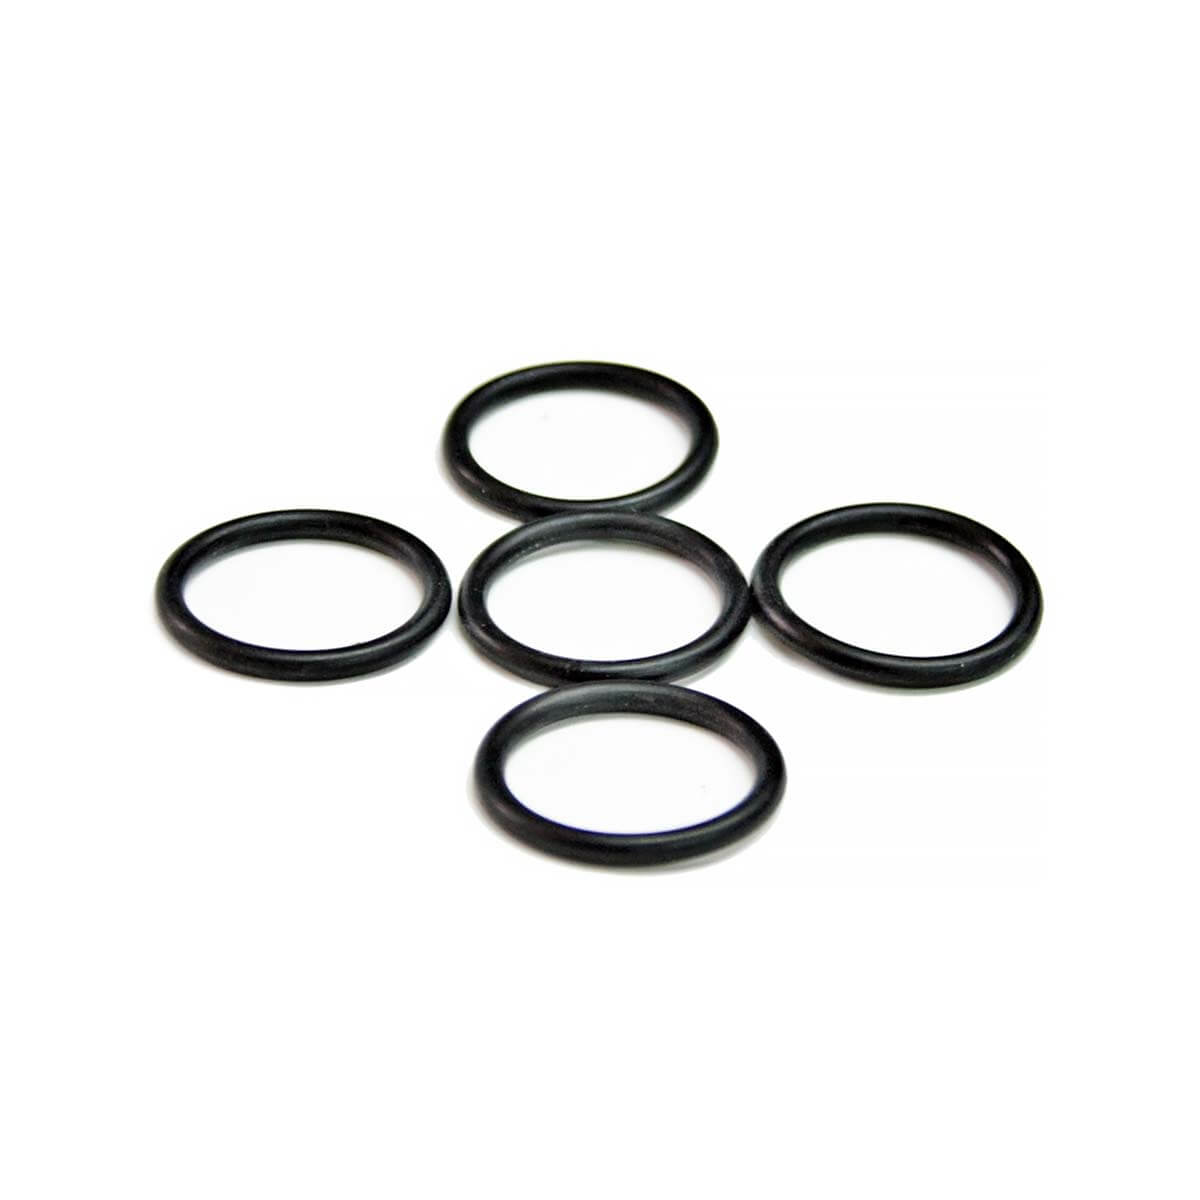 Formula O-ring Seals. £2.99 - R1, RX, RO, One